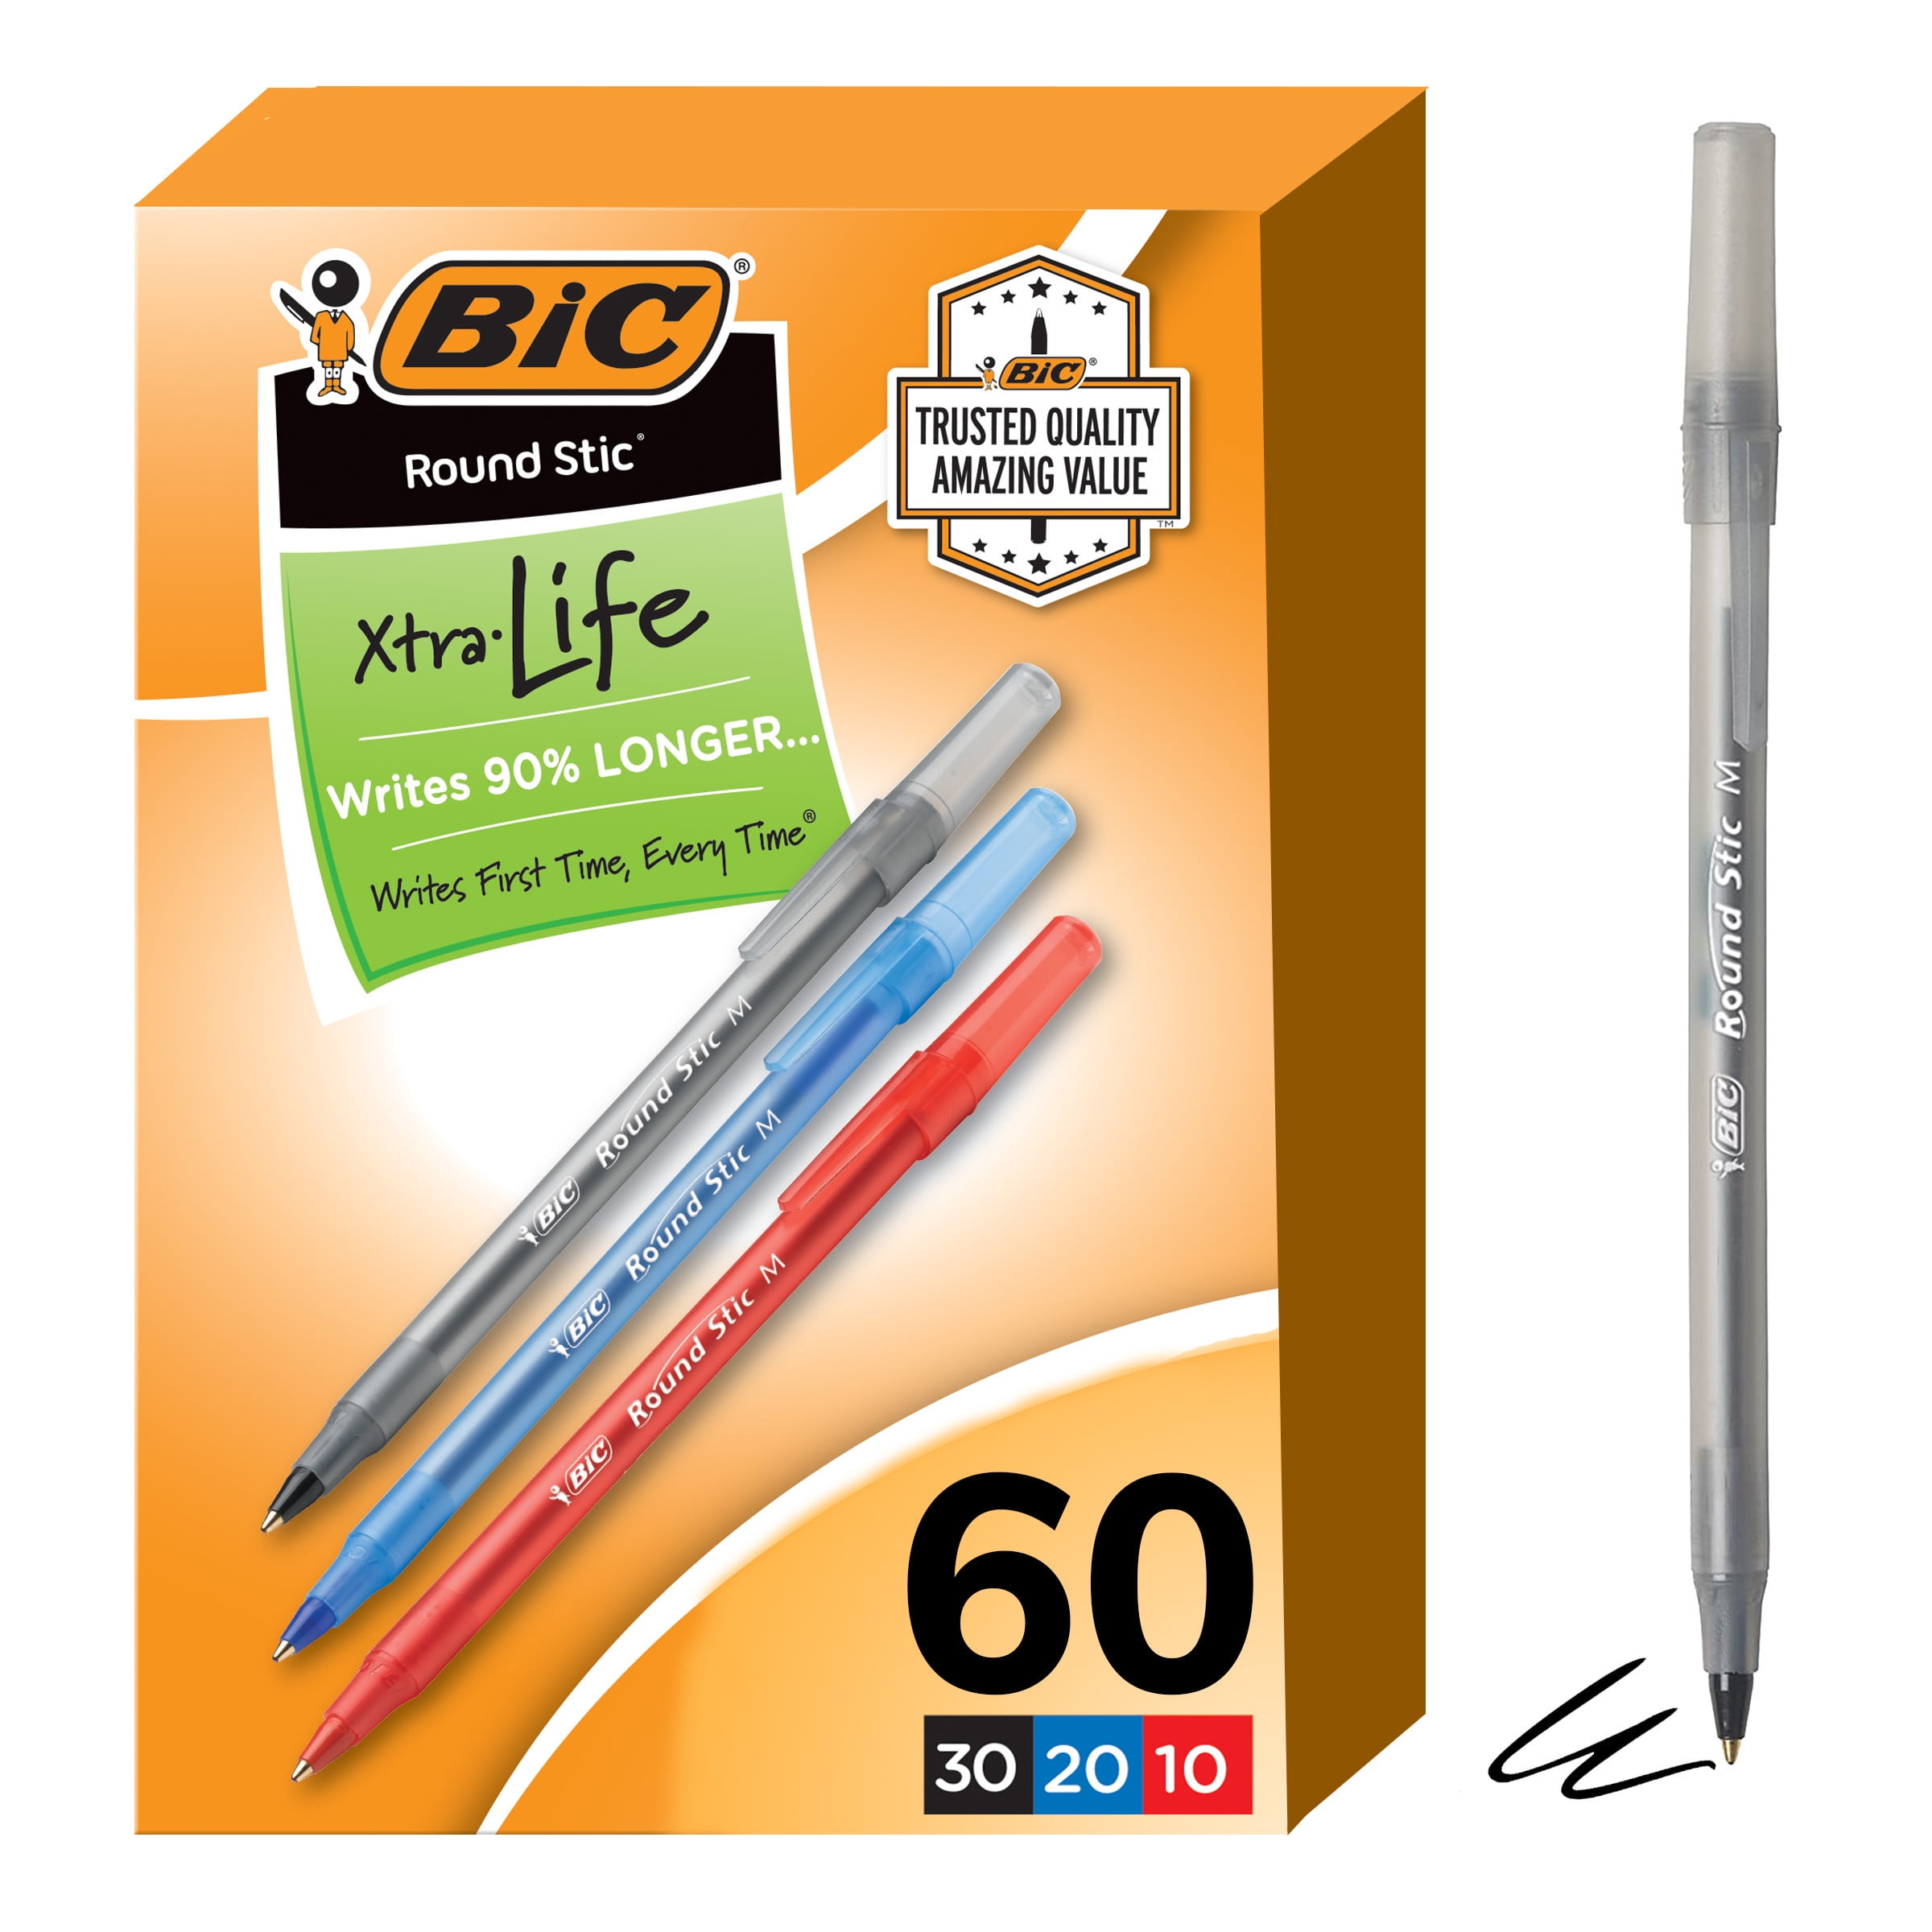 BIC Round Stic Xtra Life Ballpoint Pens, Medium Point Assorted Colors, 60 Count - Walmart.com